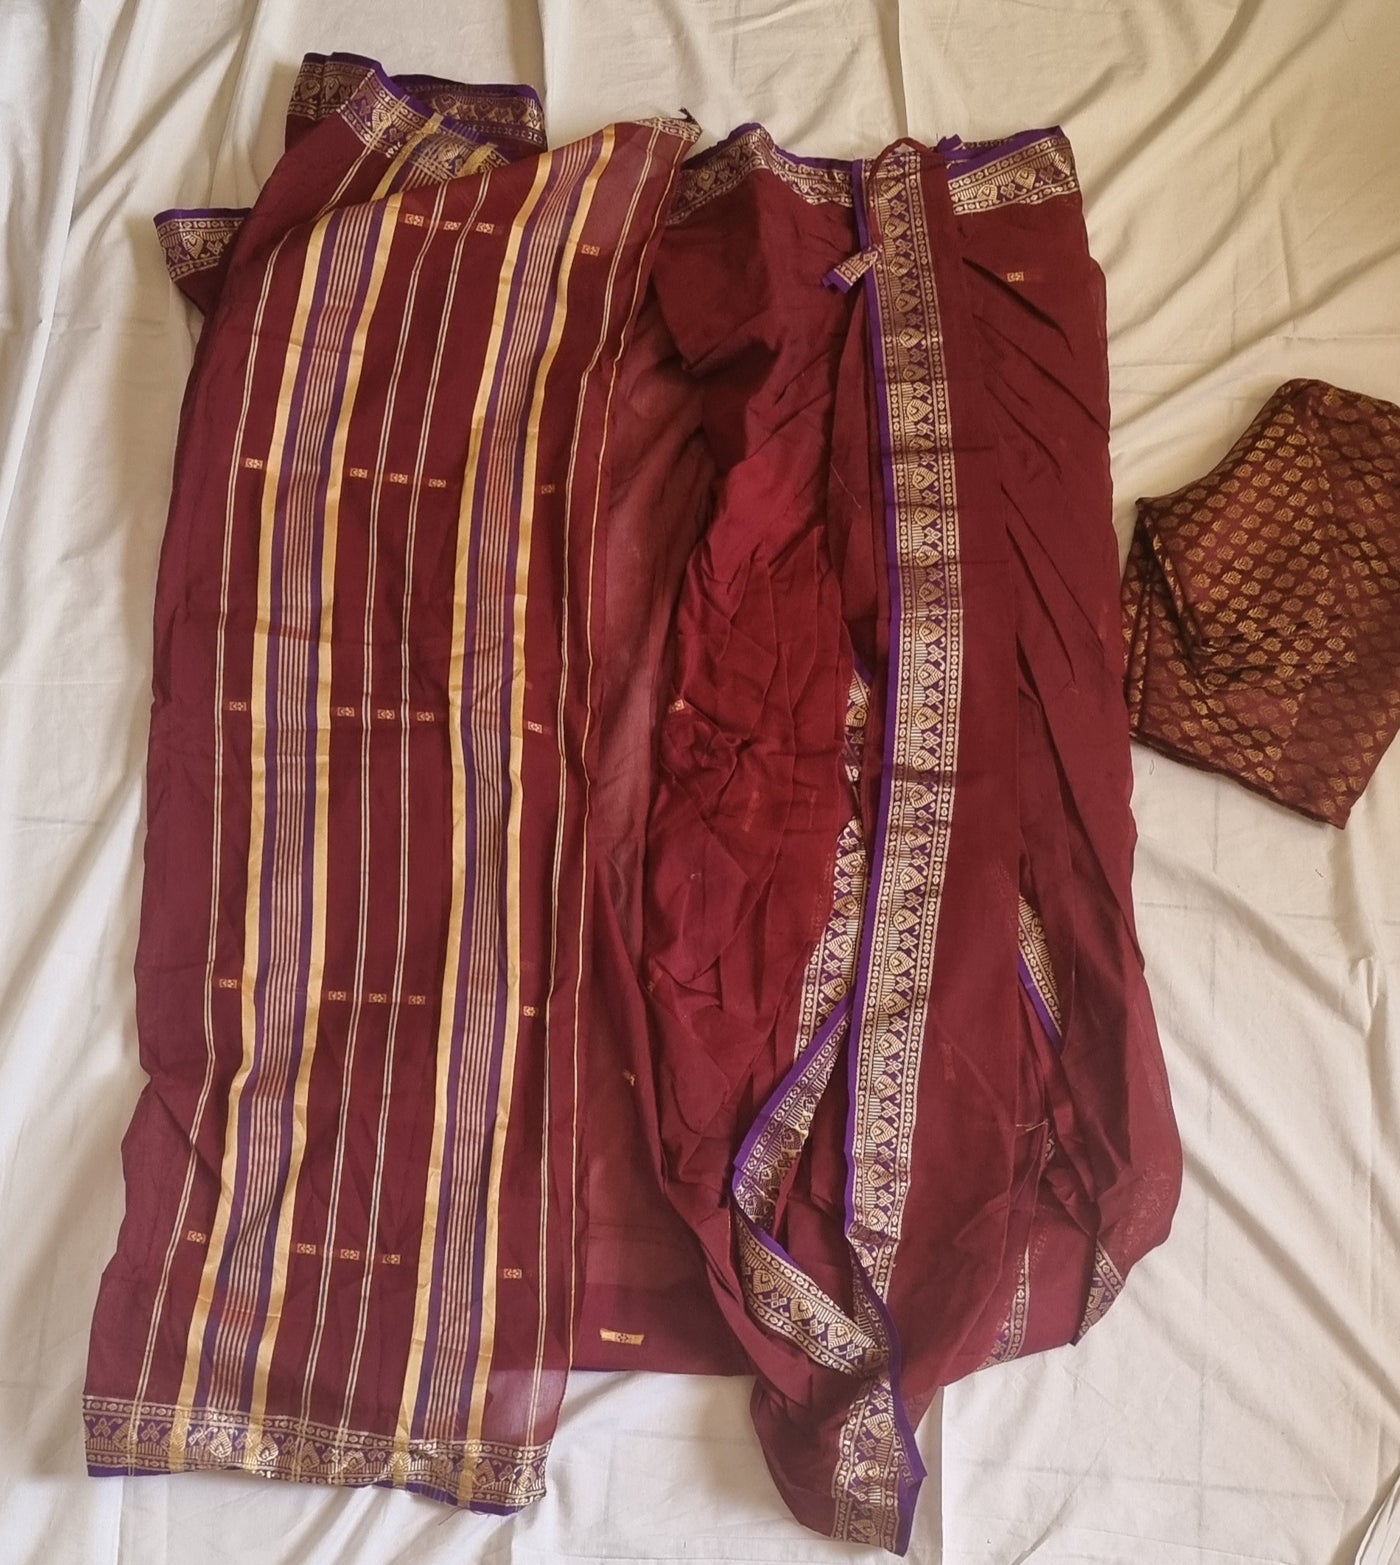 Stitched Marathi Pure Cotton Nauvari saree - Peshwai style - Upto 42 inch waist